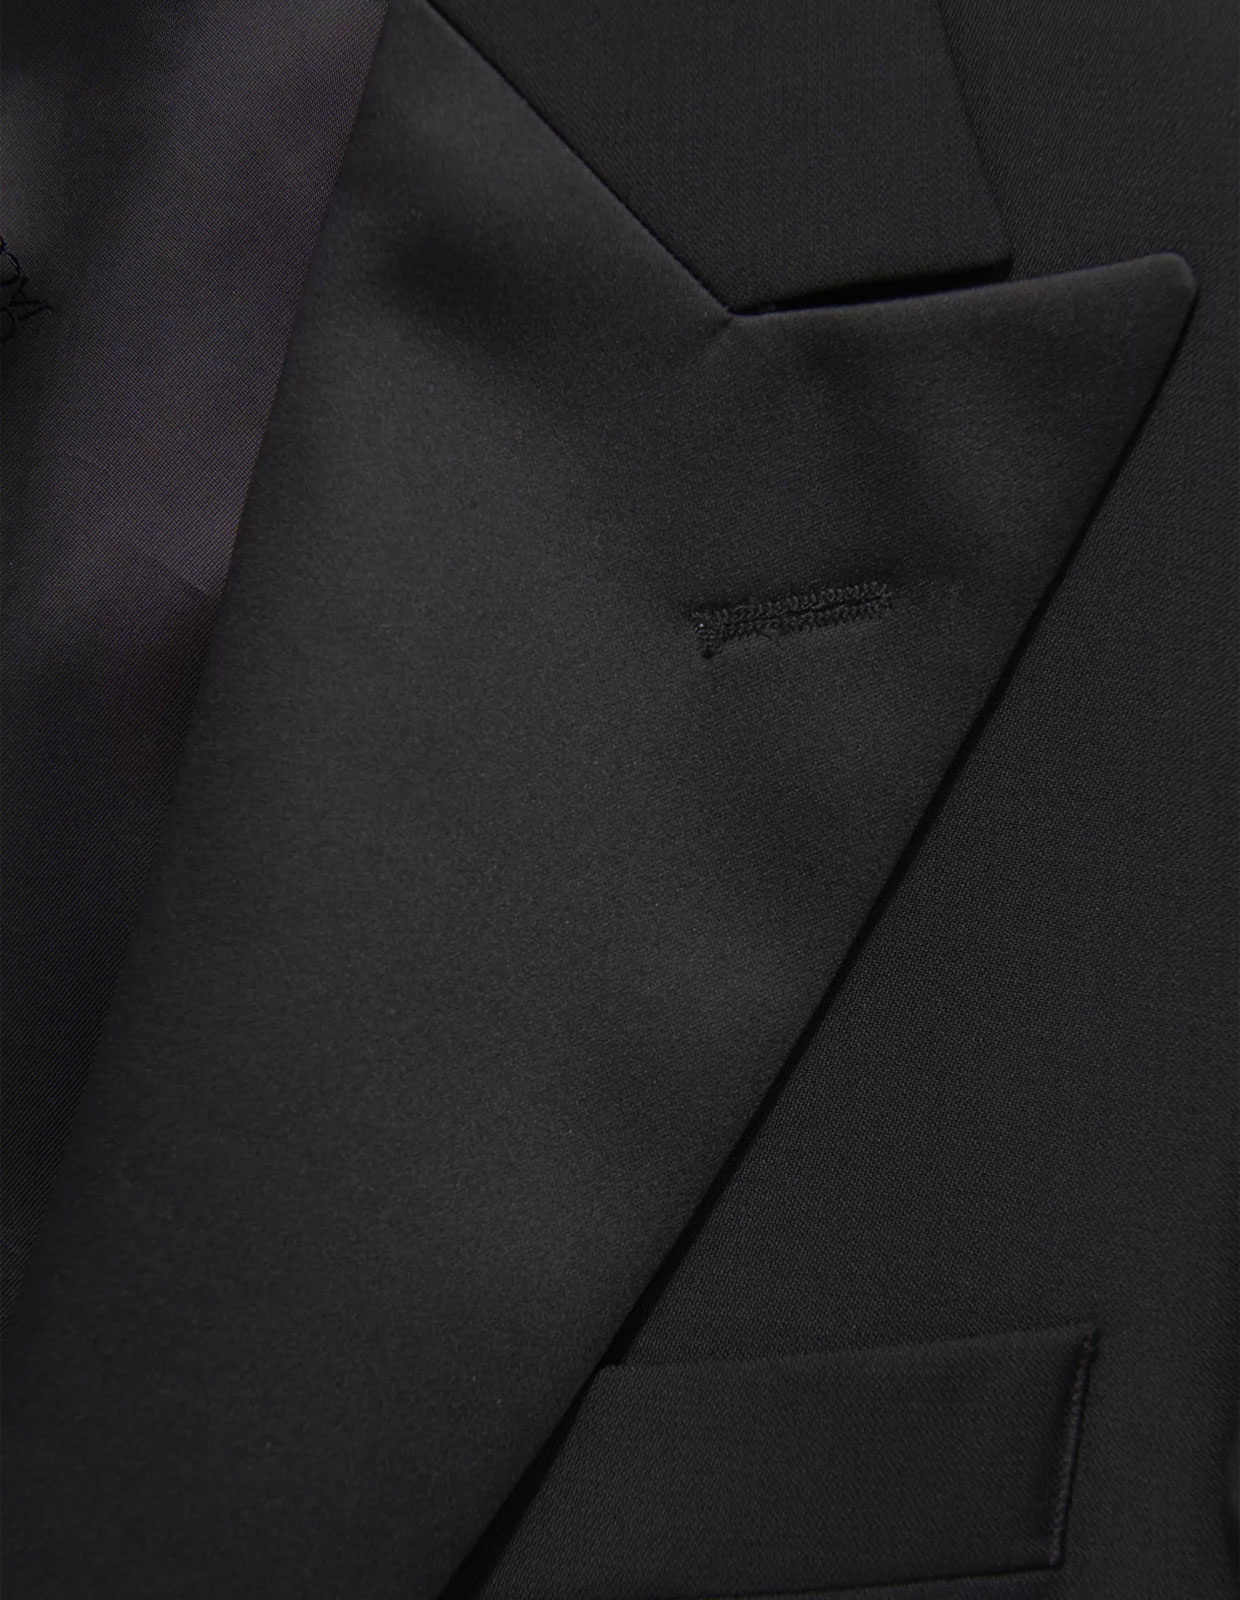 Frampton Tuxedo Jacket Mix & Match Black